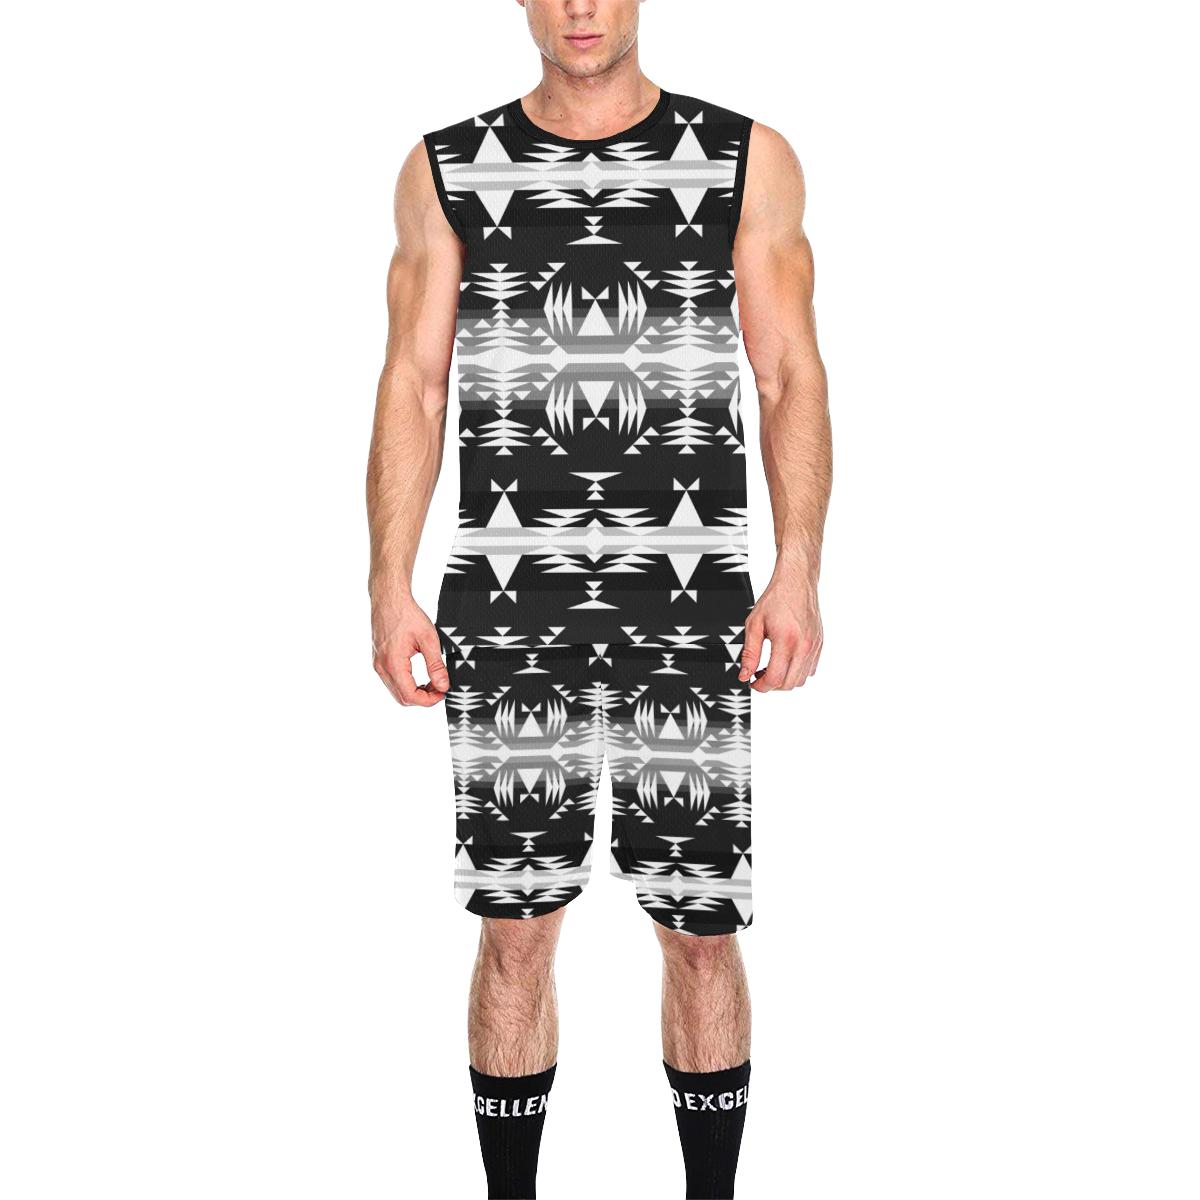 Between the Mountains Black and White All Over Print Basketball Uniform Basketball Uniform e-joyer 